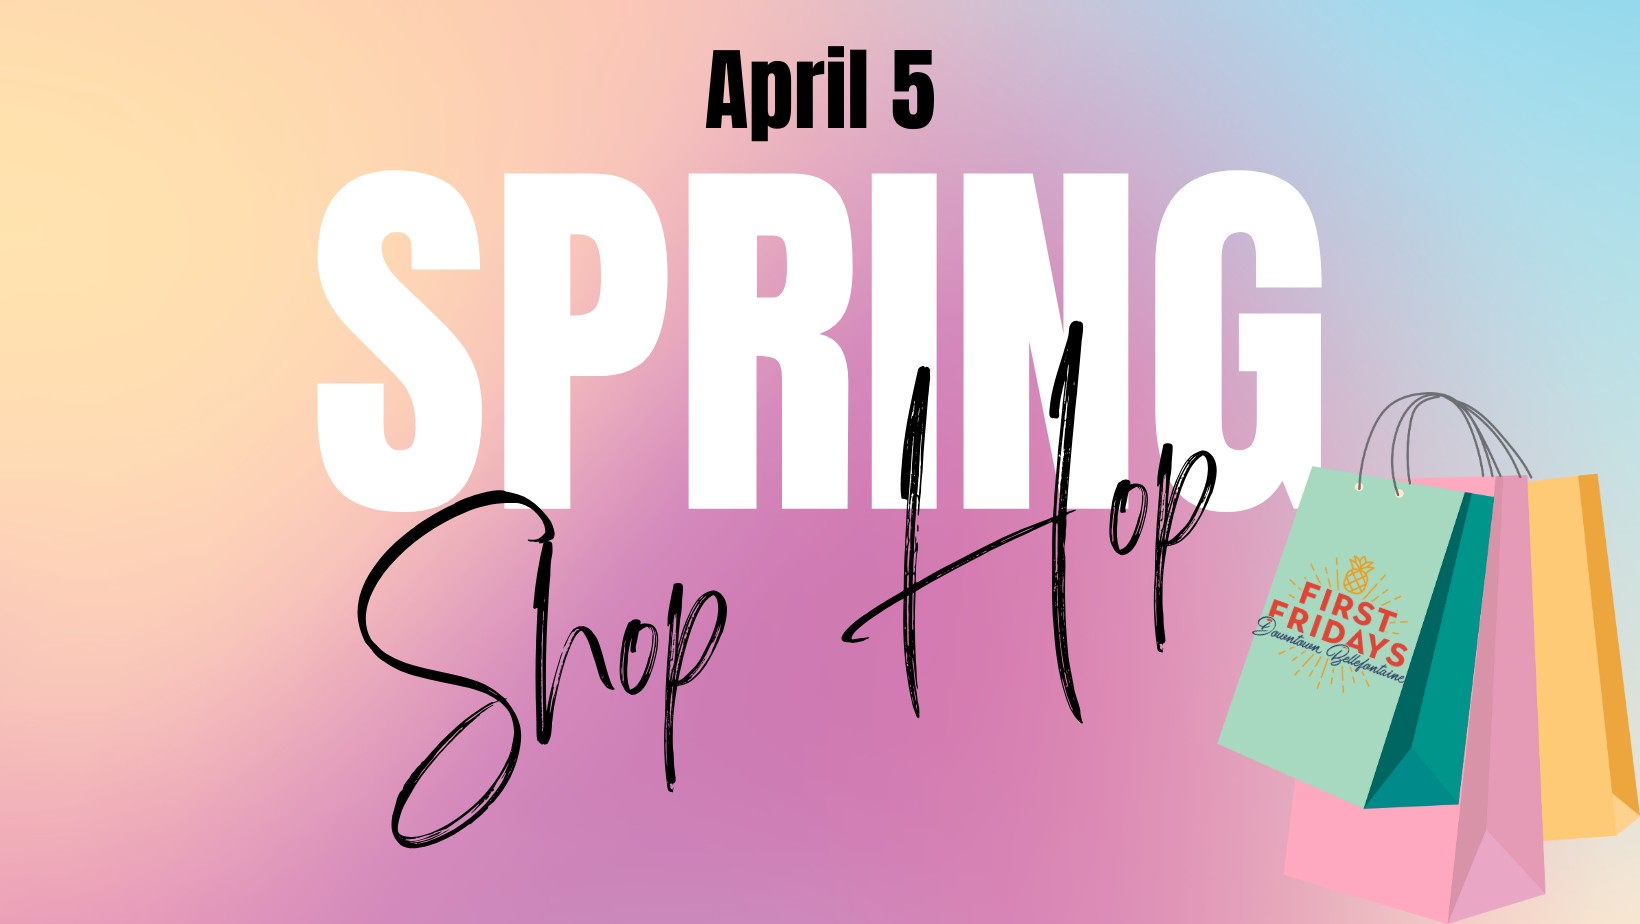 Downtown Bellefontaine Spring Shop Hop